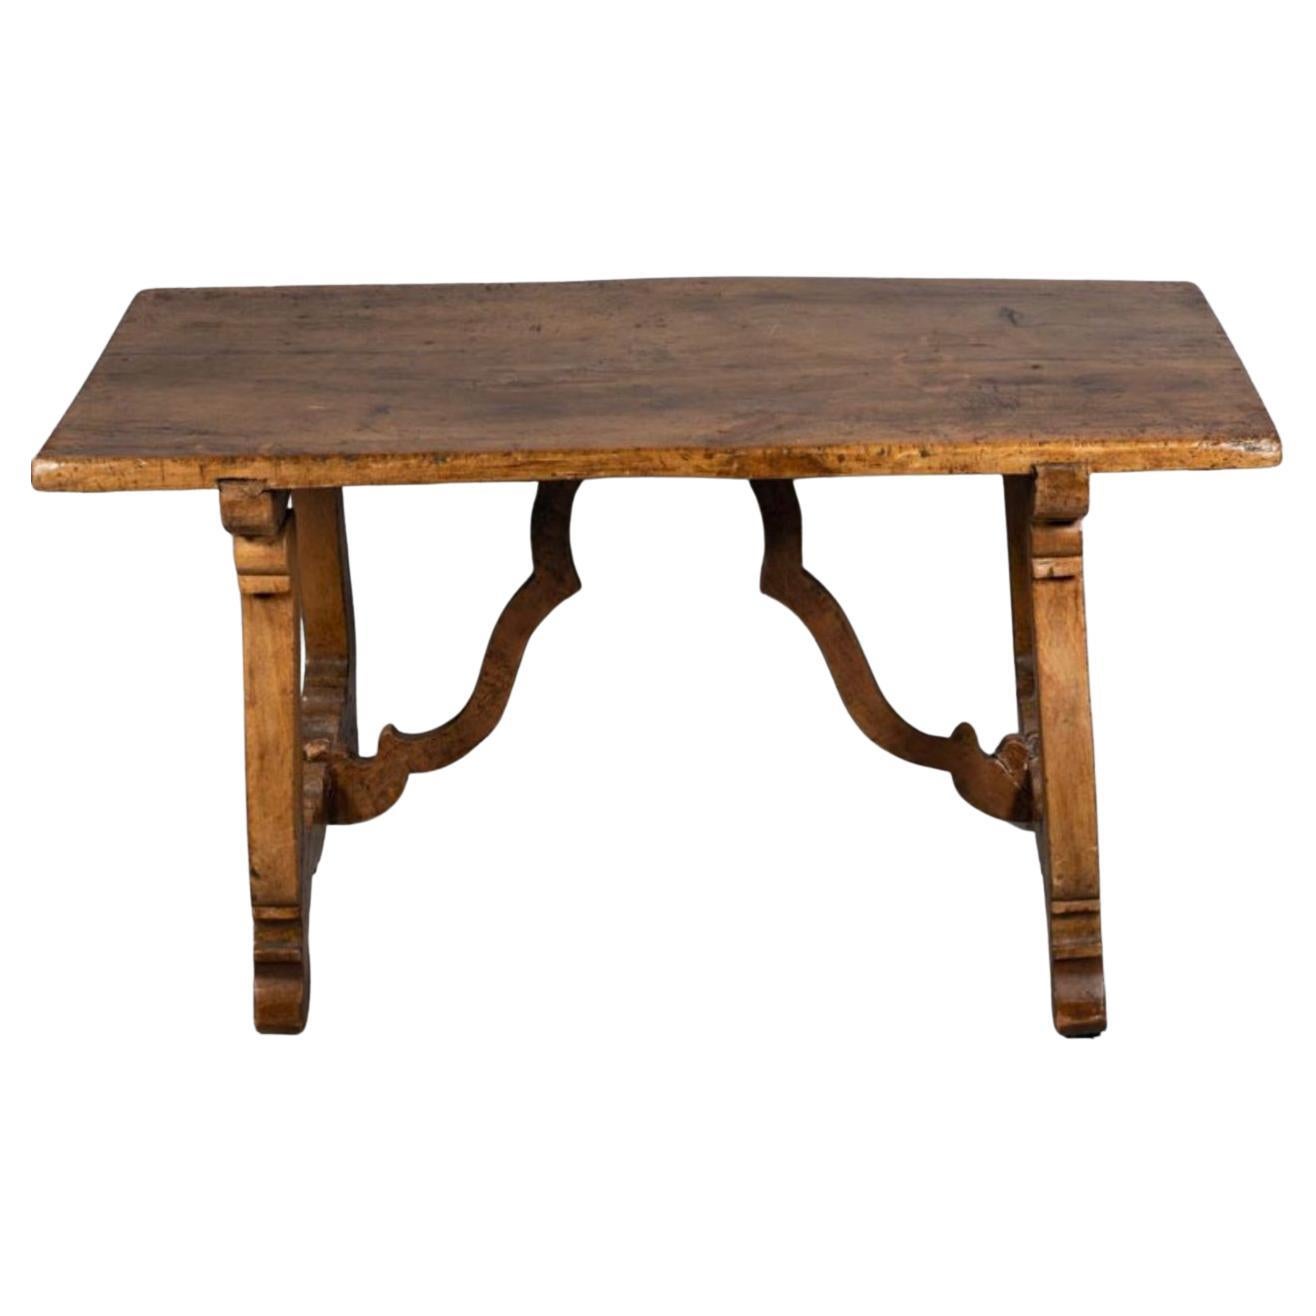 Late 17th Century Spanish Baroque Walnut Trestle Table